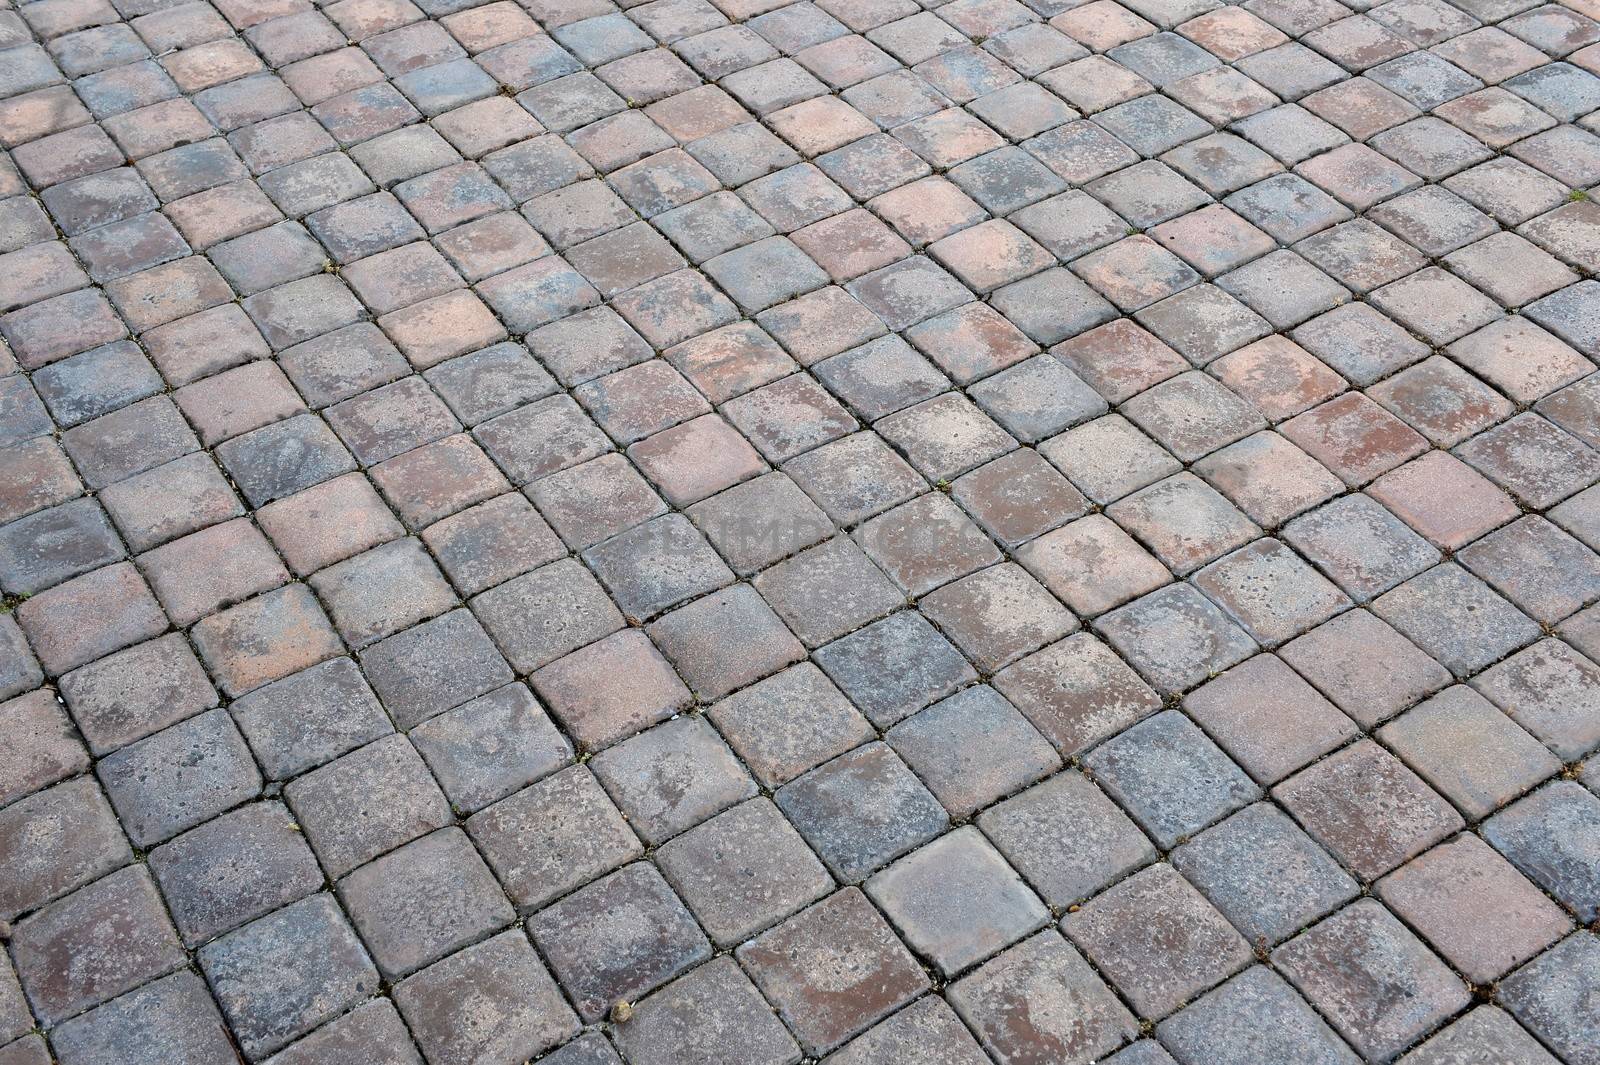 A close up of outdoor brick paving